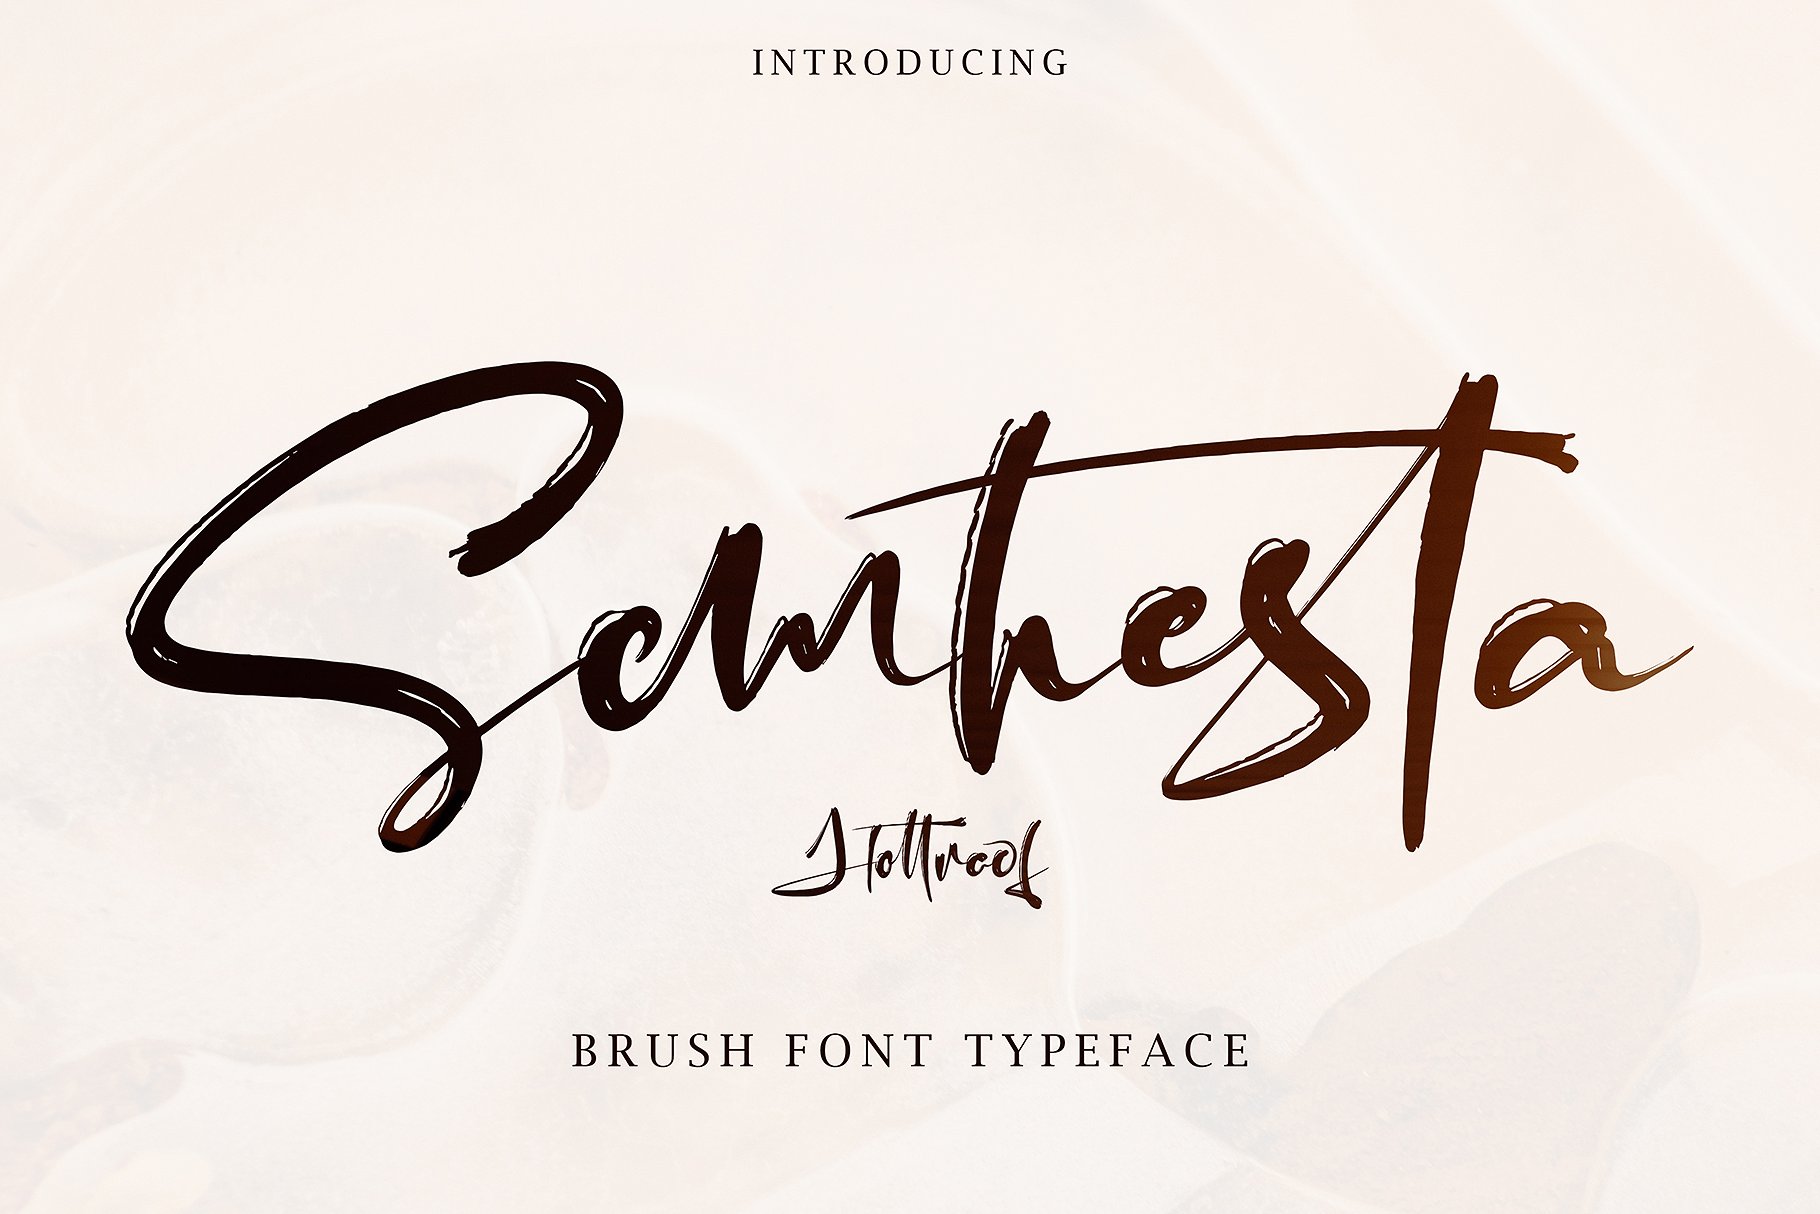 现代婚礼手写书法英文字体 Semhesta Brush Handwritten font插图